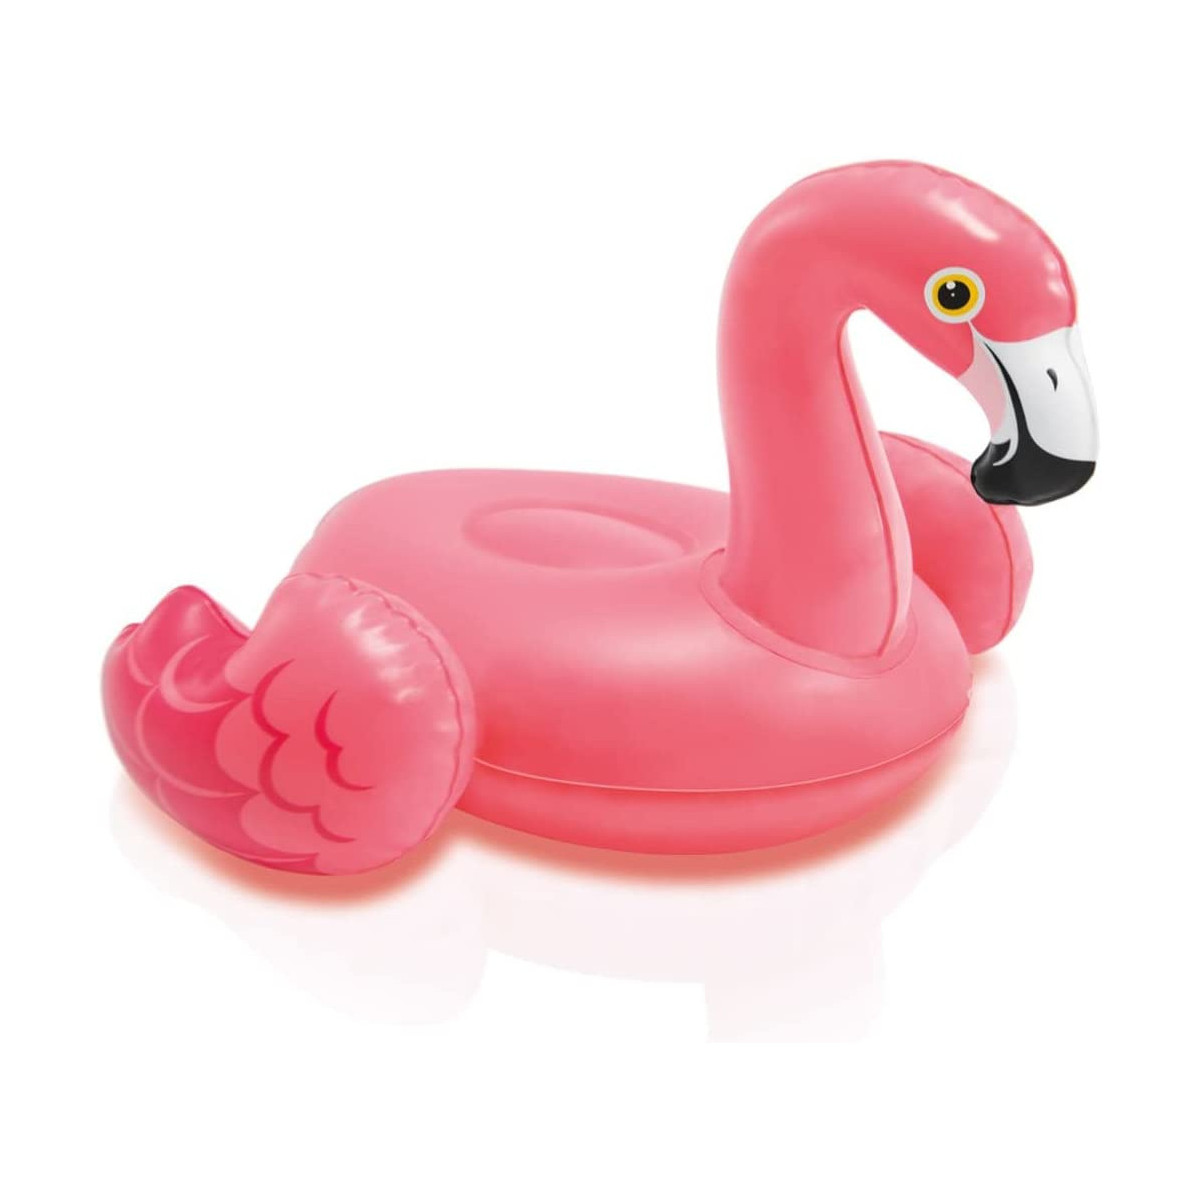 Badewannentiere mehrfarbig 58590NP - Flamingo Play INTEX - Wasserspielzeug, Puff\'n